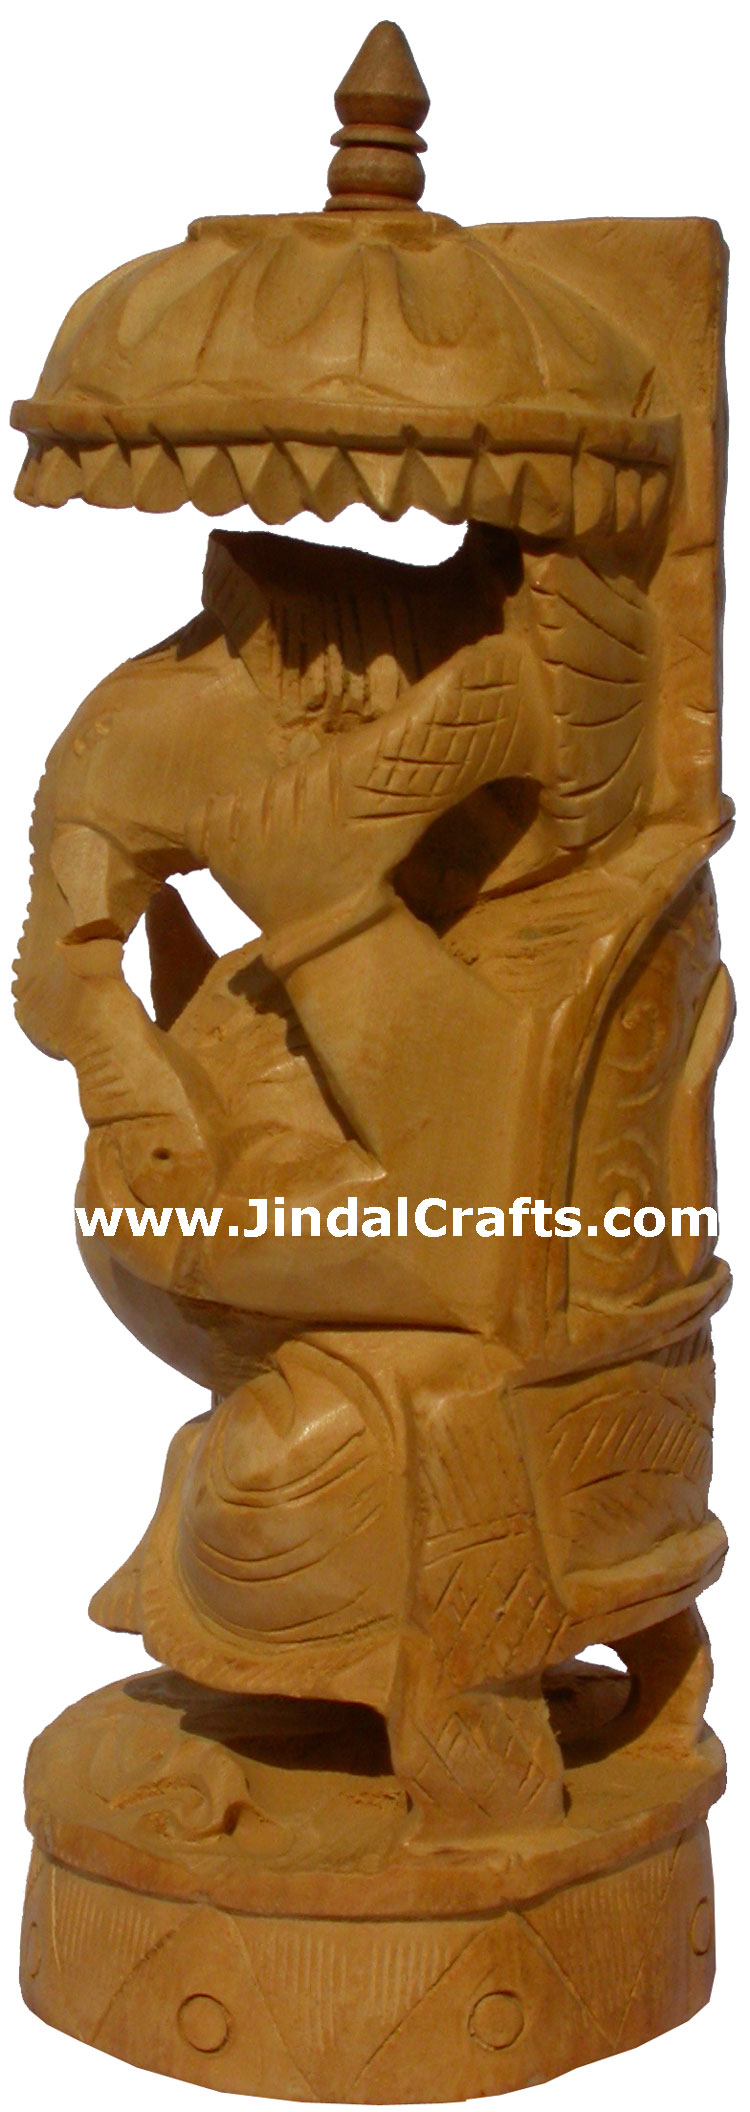 Wood Sculpture Hand Carved Umbrella Ganesh Statuette